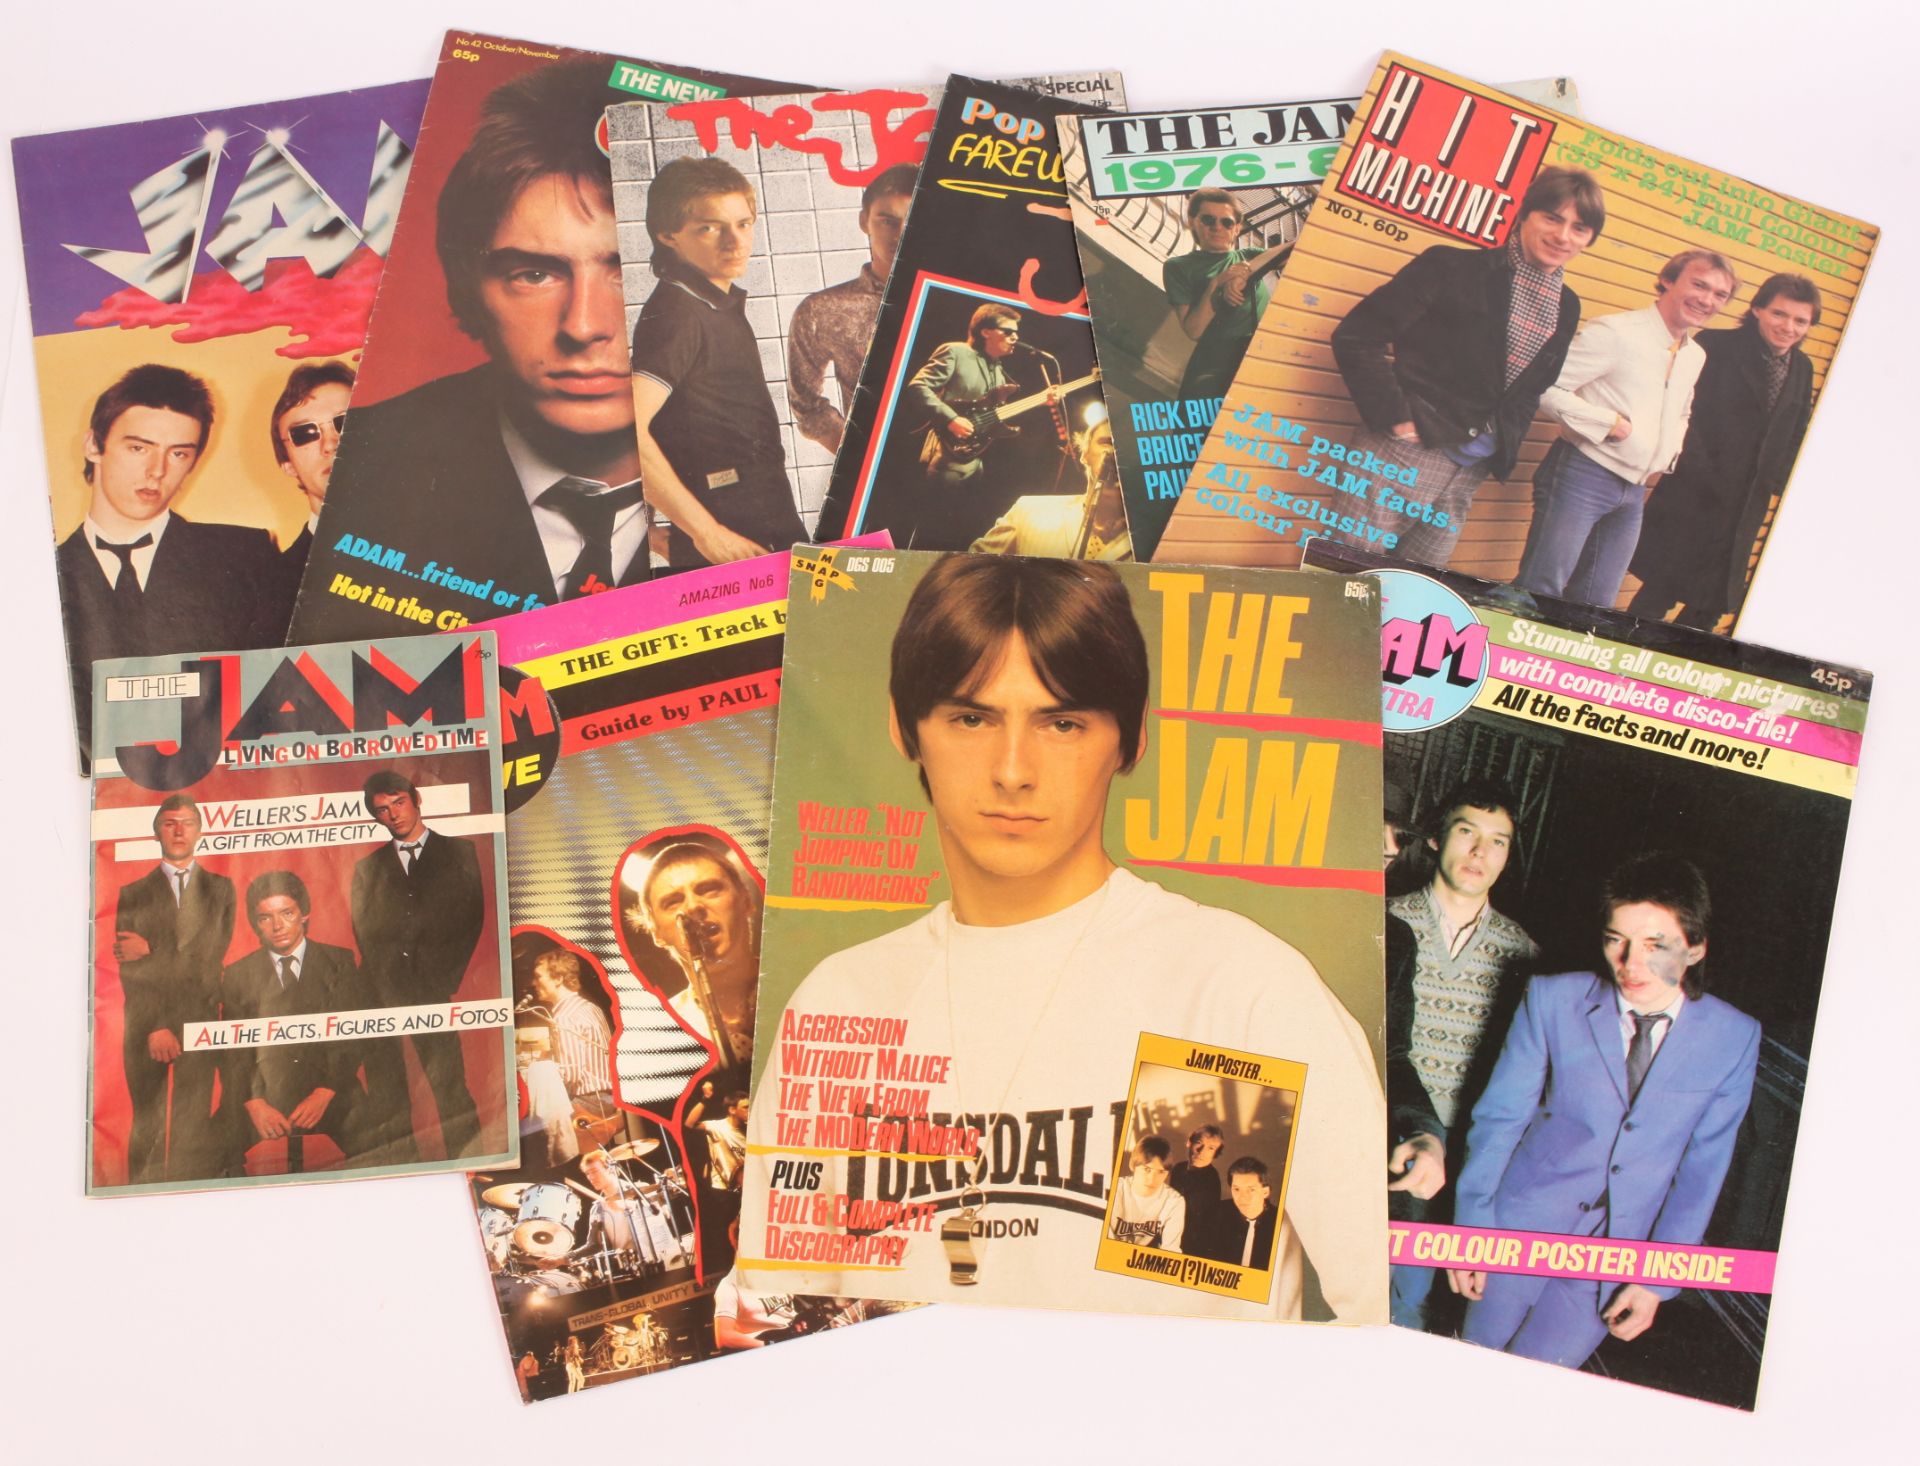 The Jam - Scrapbooks of Magazine Cuttings and Music Magazine Publications - Image 2 of 5